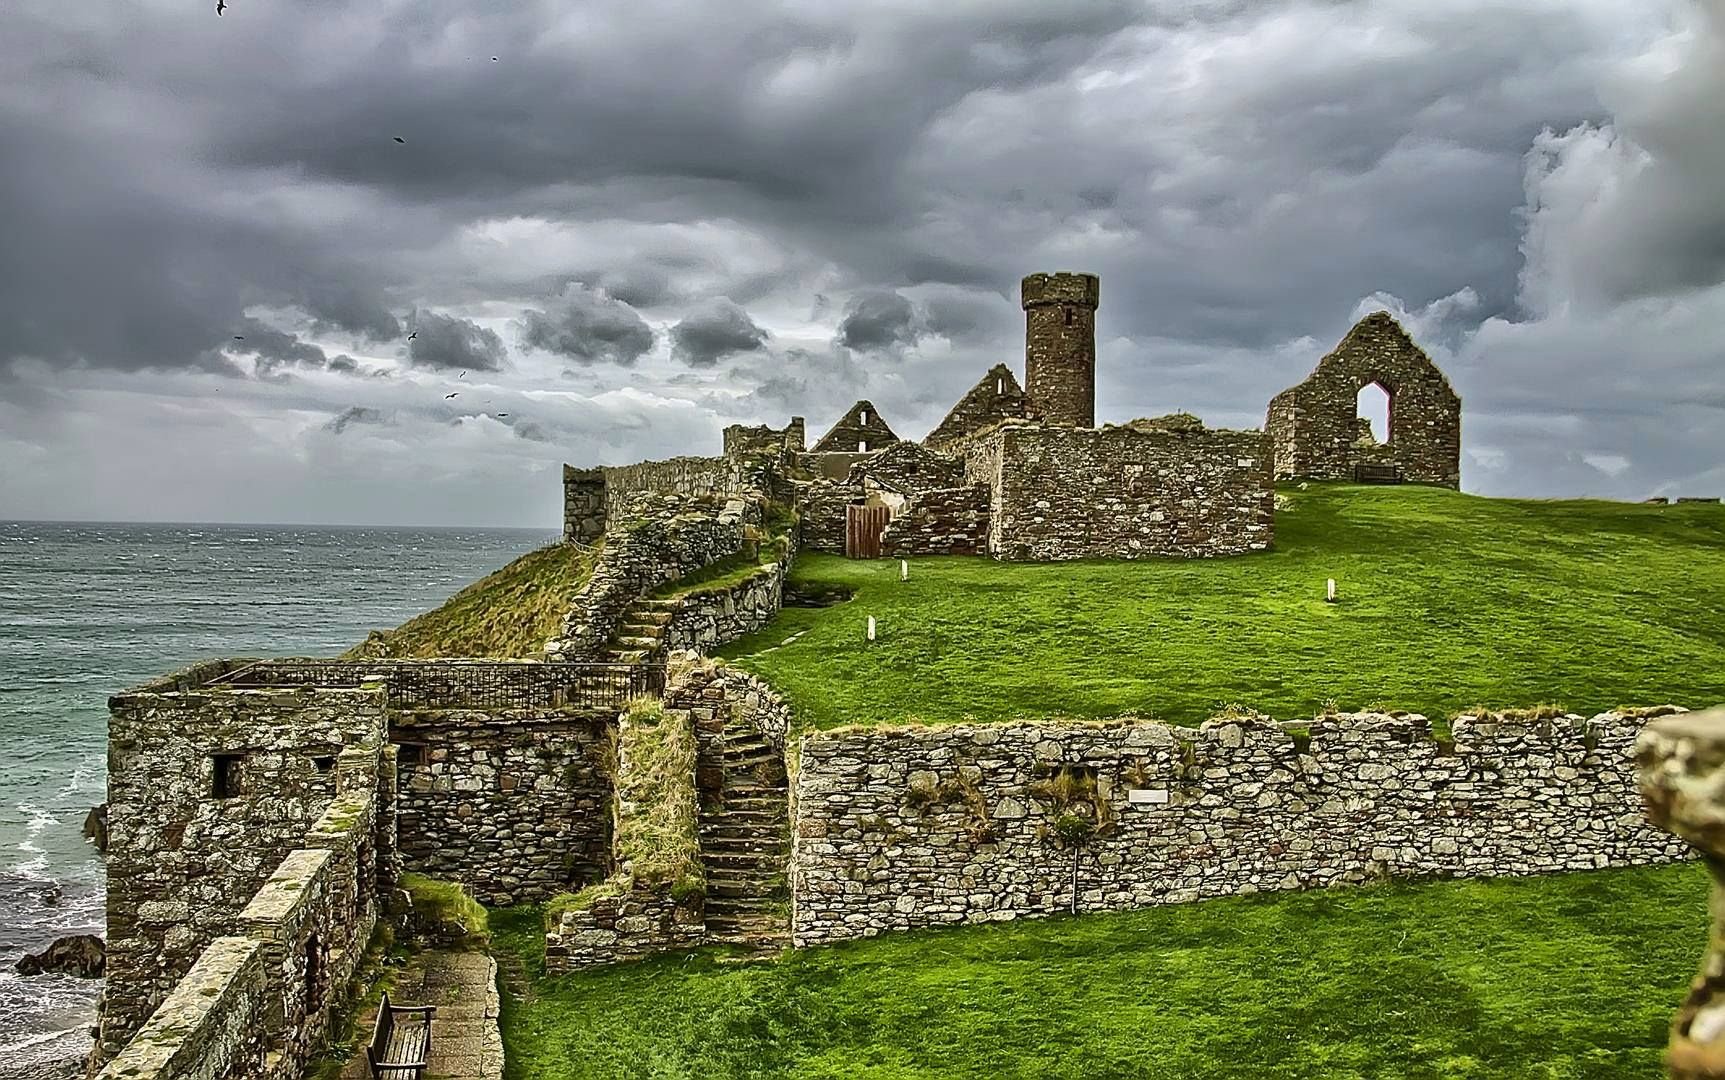 The isle in the irish sea. Остров Мэн Англия. Замок пил остров Мэн. Британские острова остров Мэн. Замки острова Мэн.